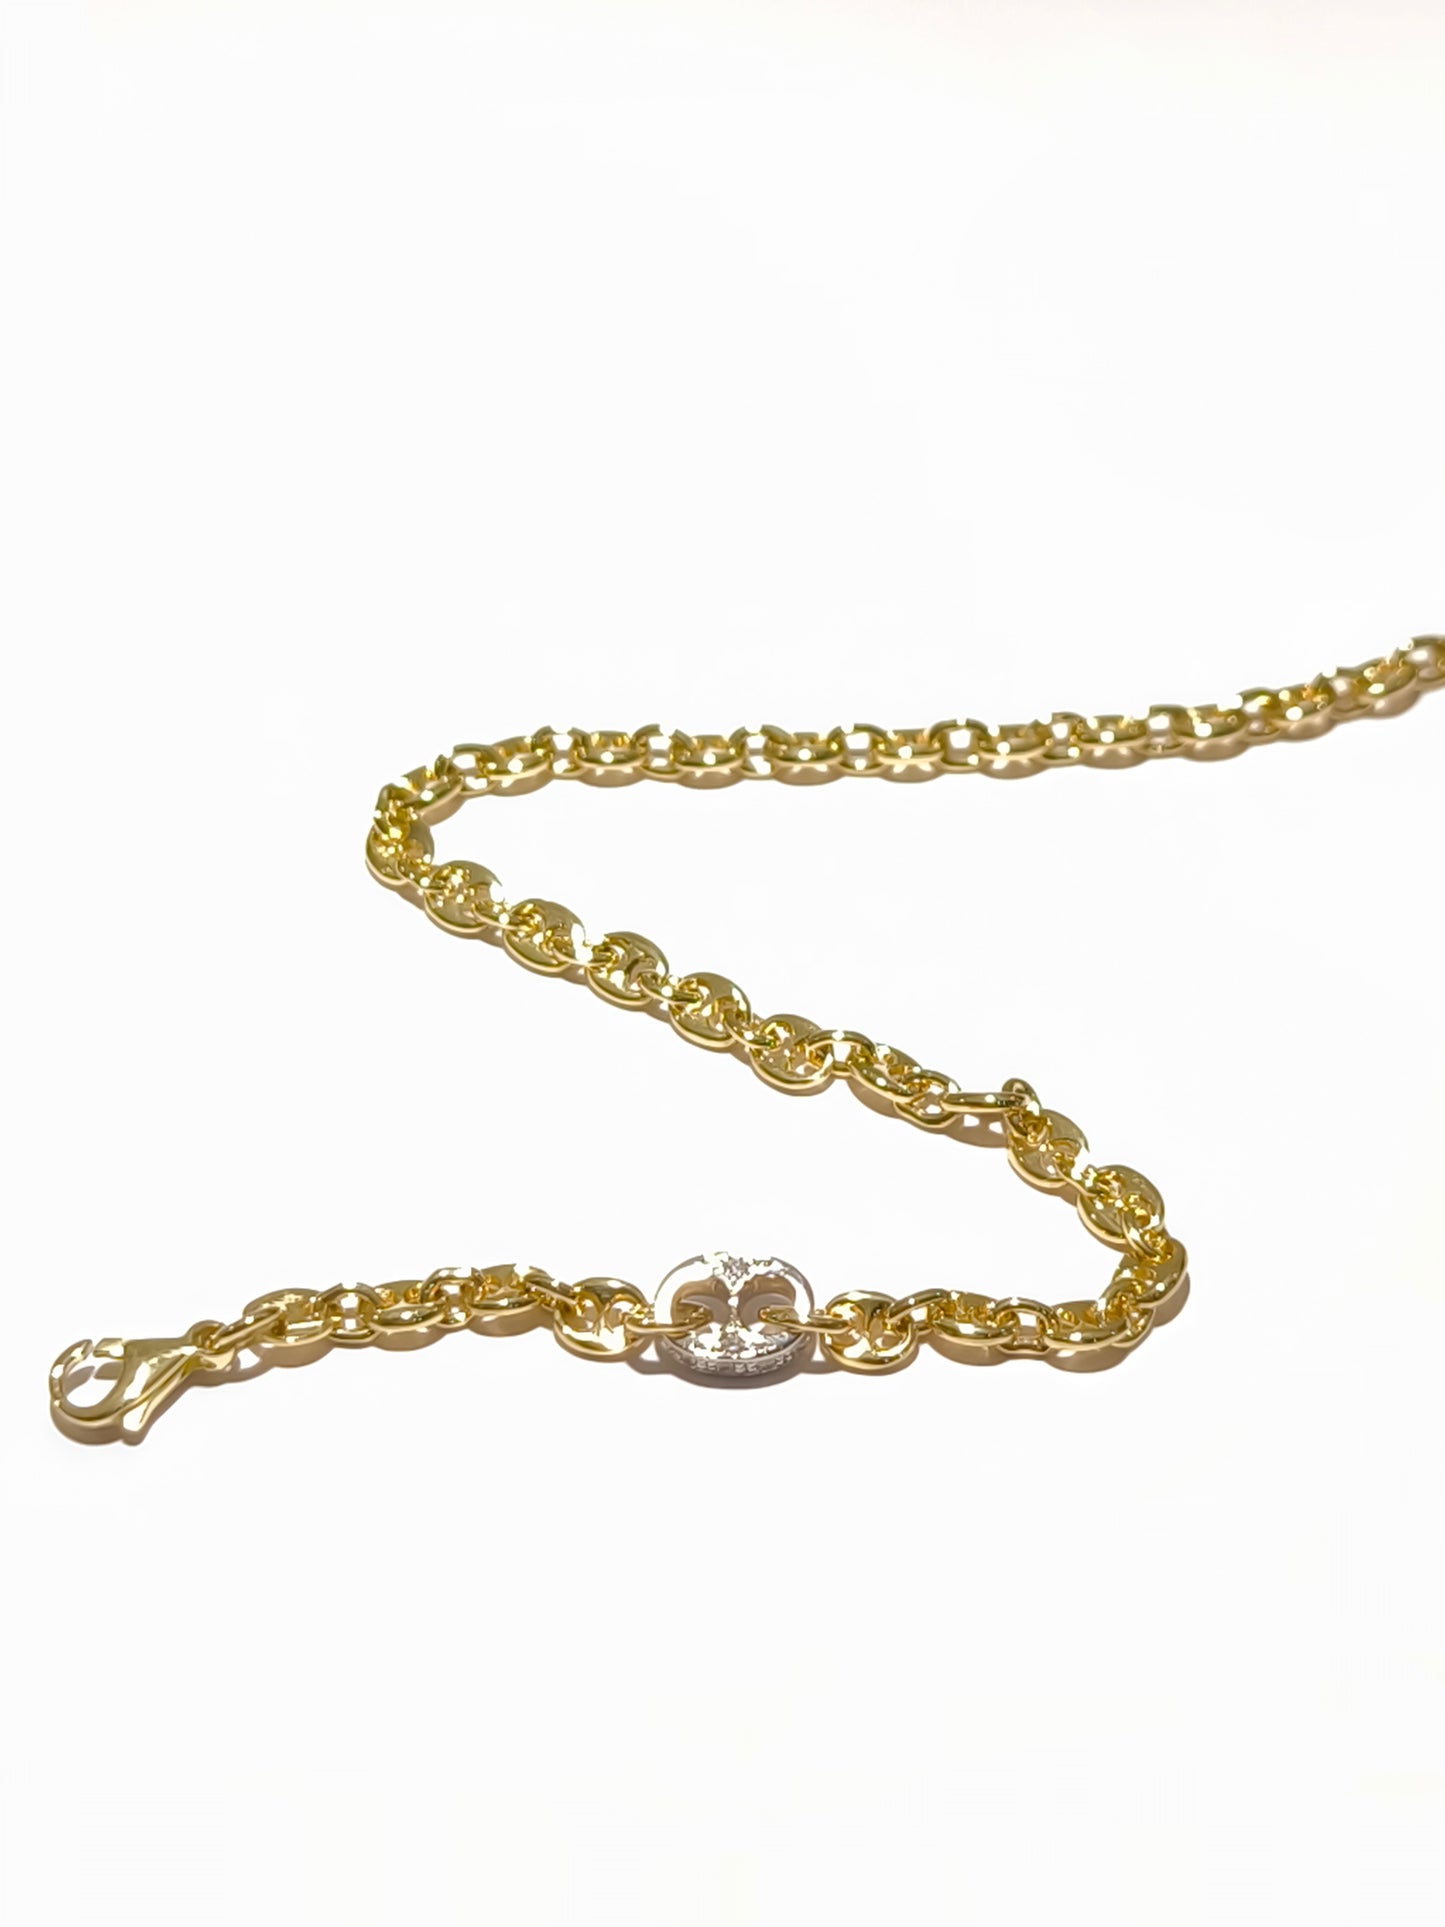 18kt gold and diamond men's bracelet